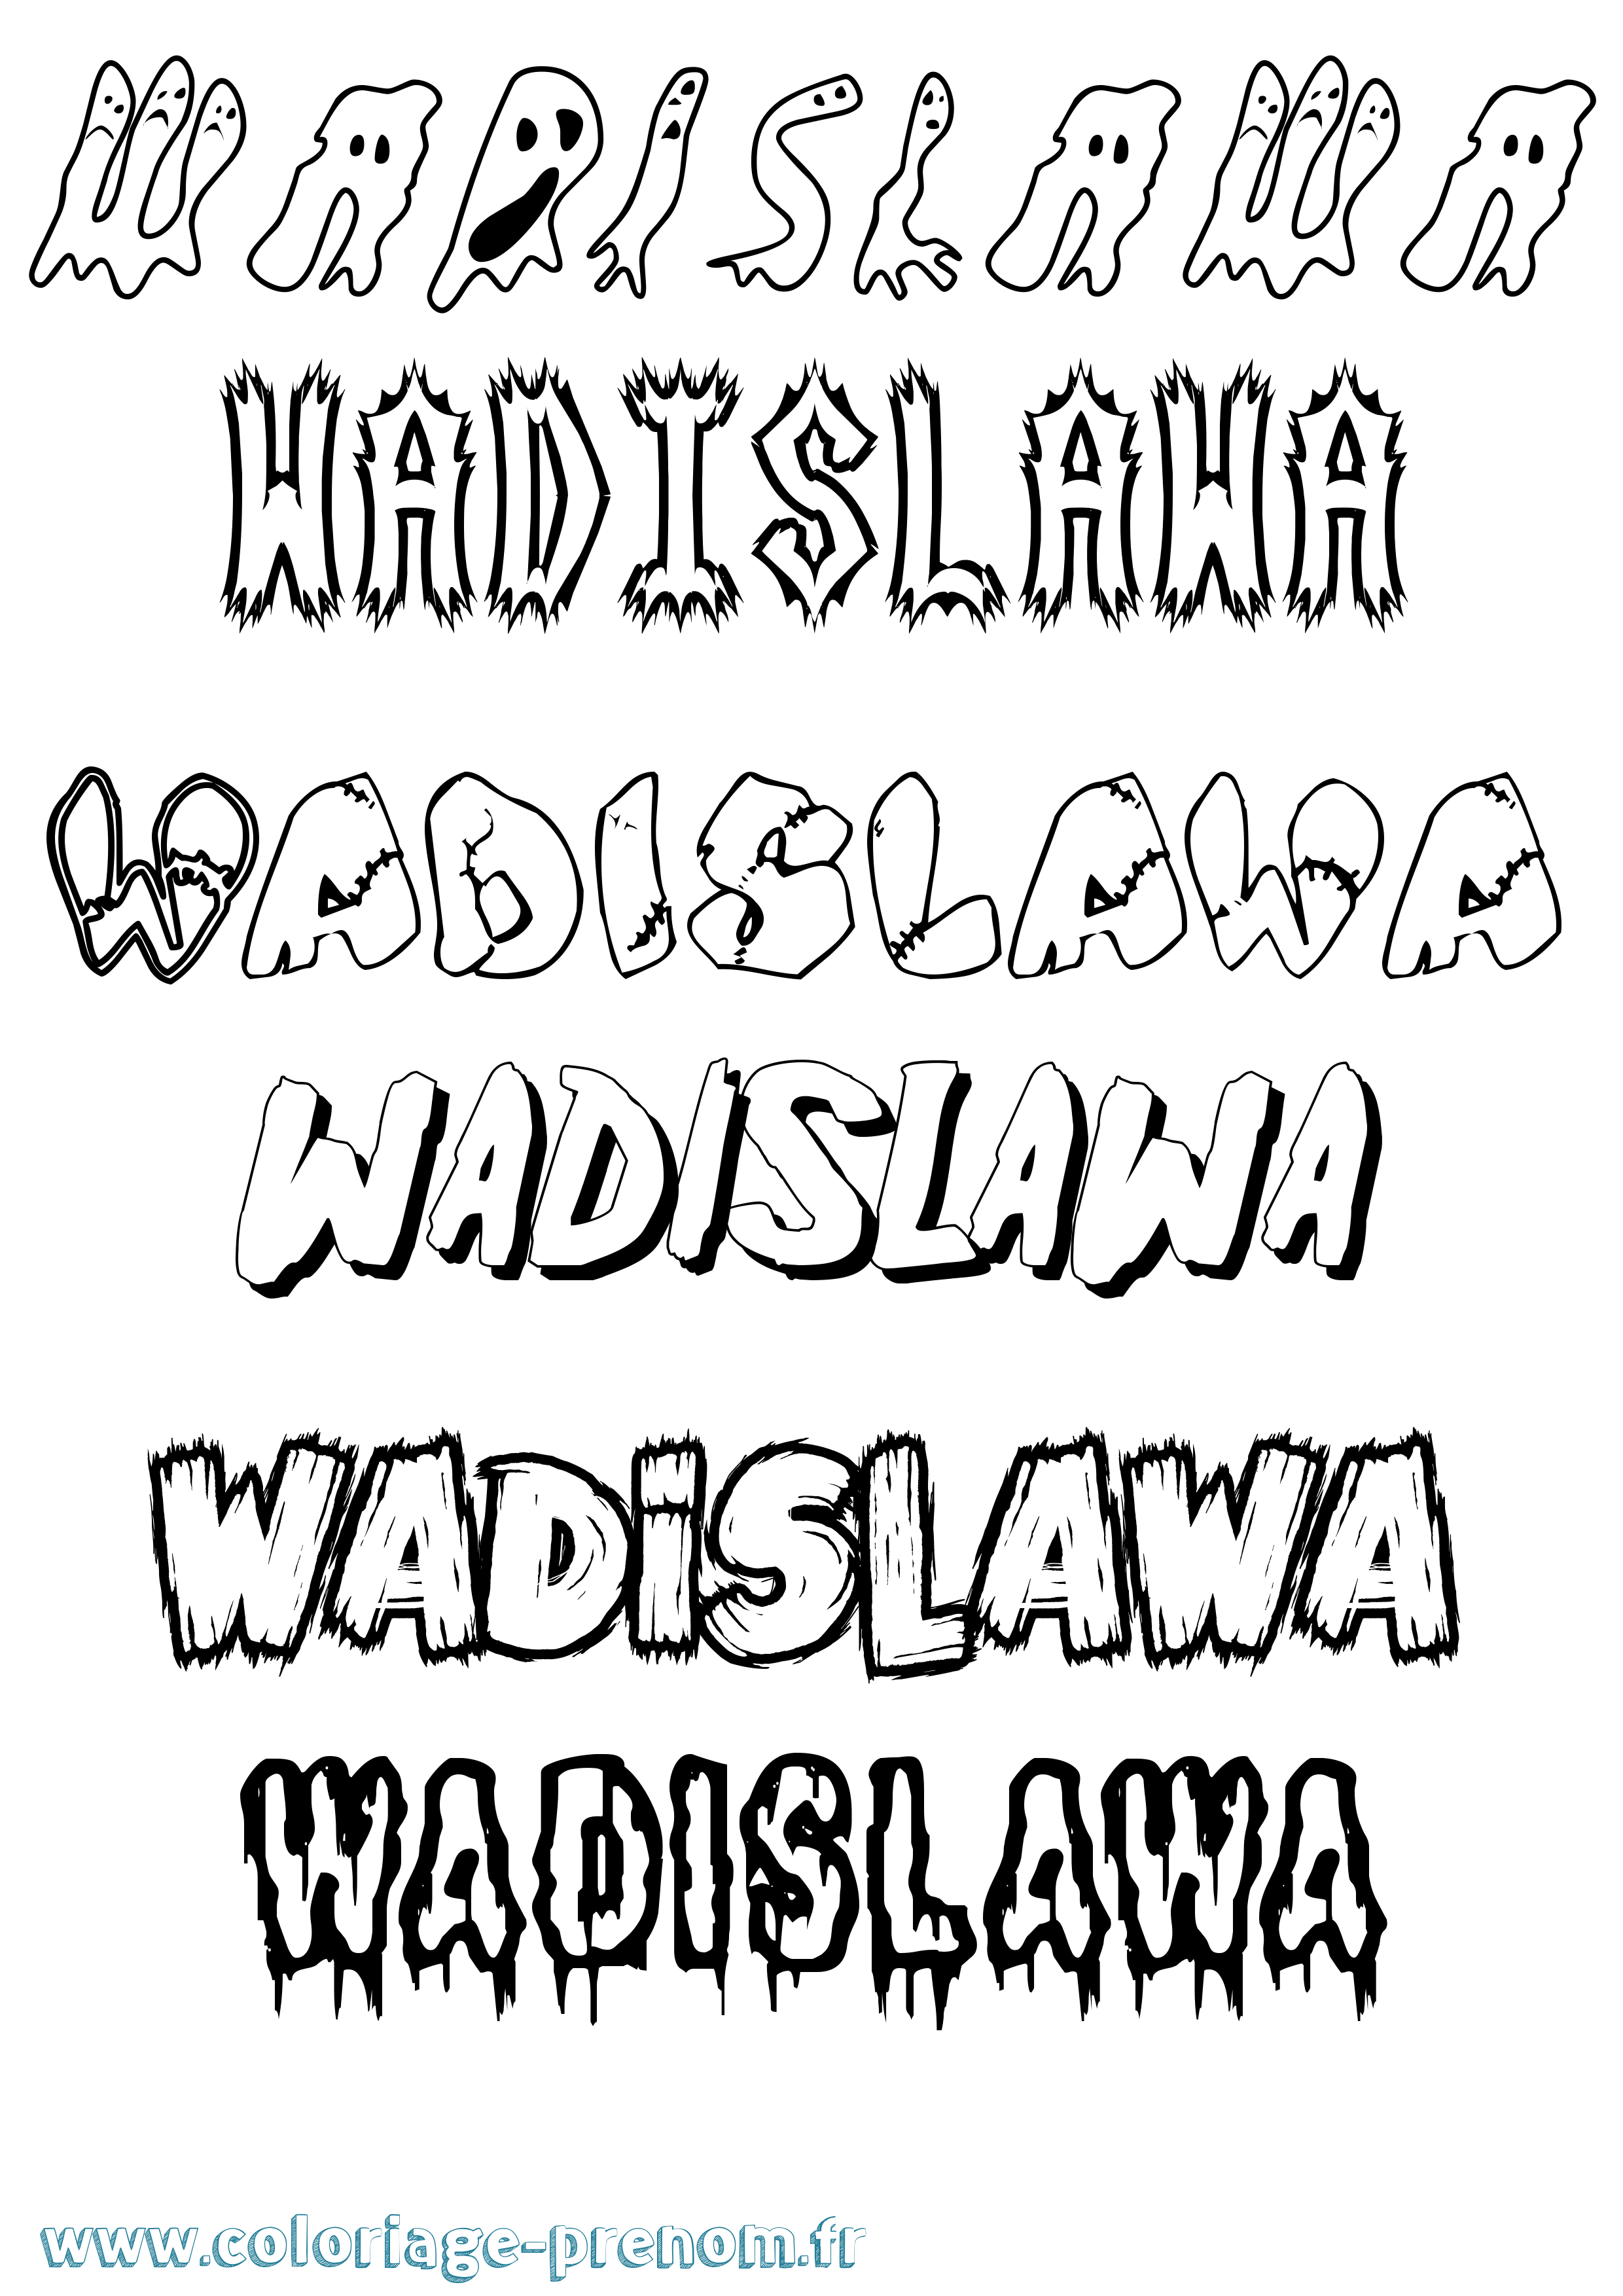 Coloriage prénom Wadislawa Frisson